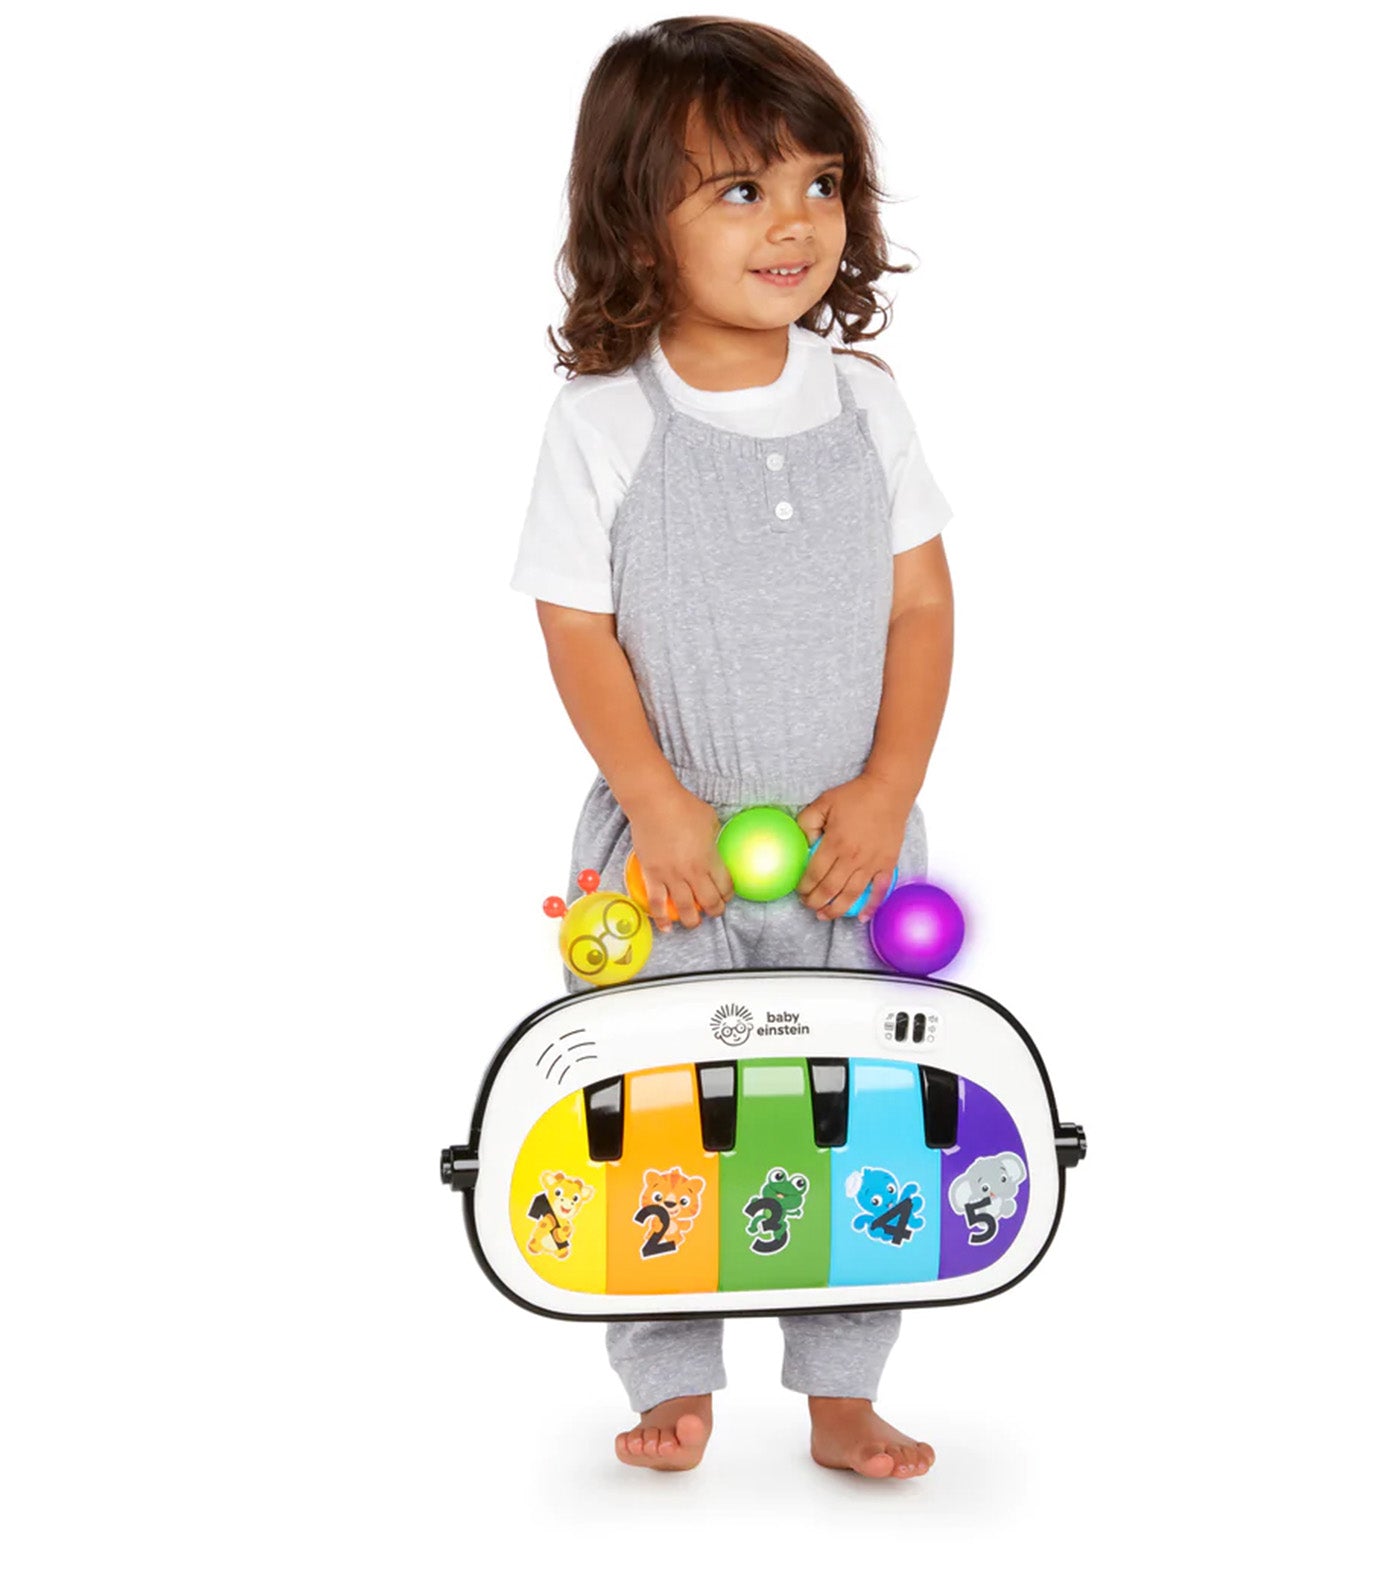 Baby Einstein 4-in-1 Kickin' Tunes Music and Language Discovery Gym